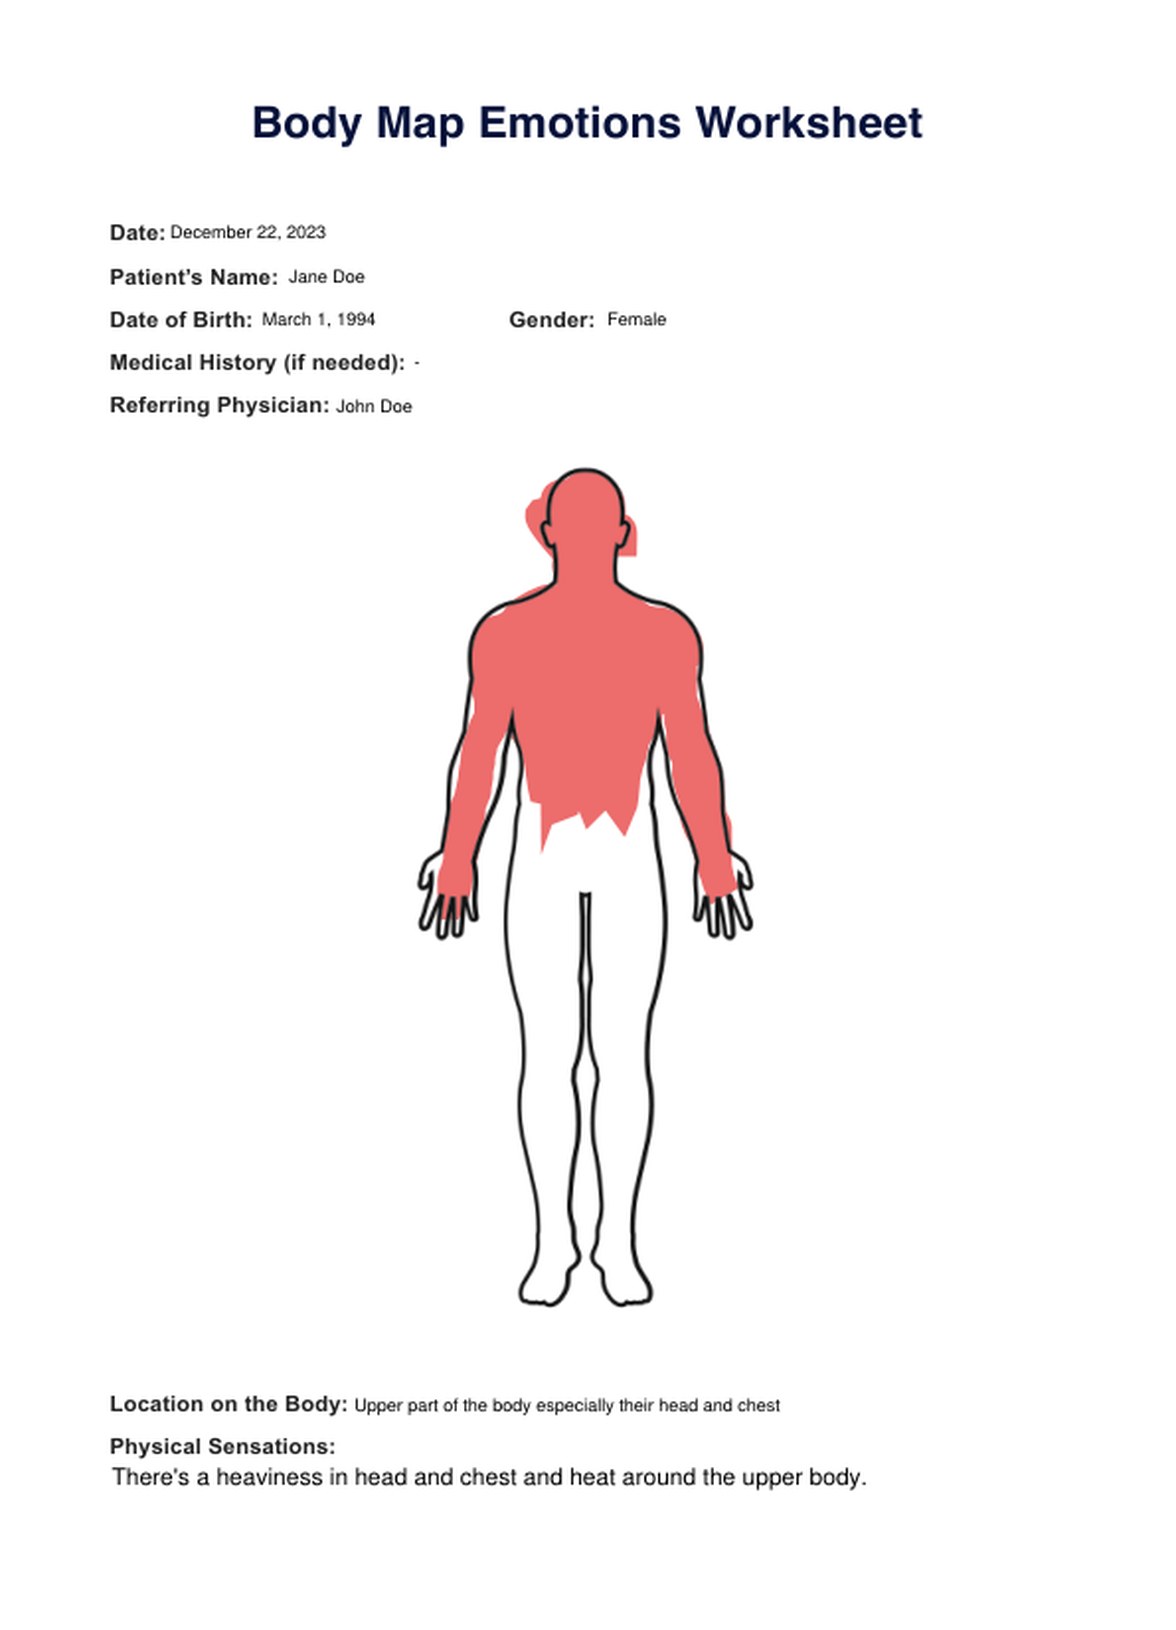 Body Map Emotions Worksheet PDF Example